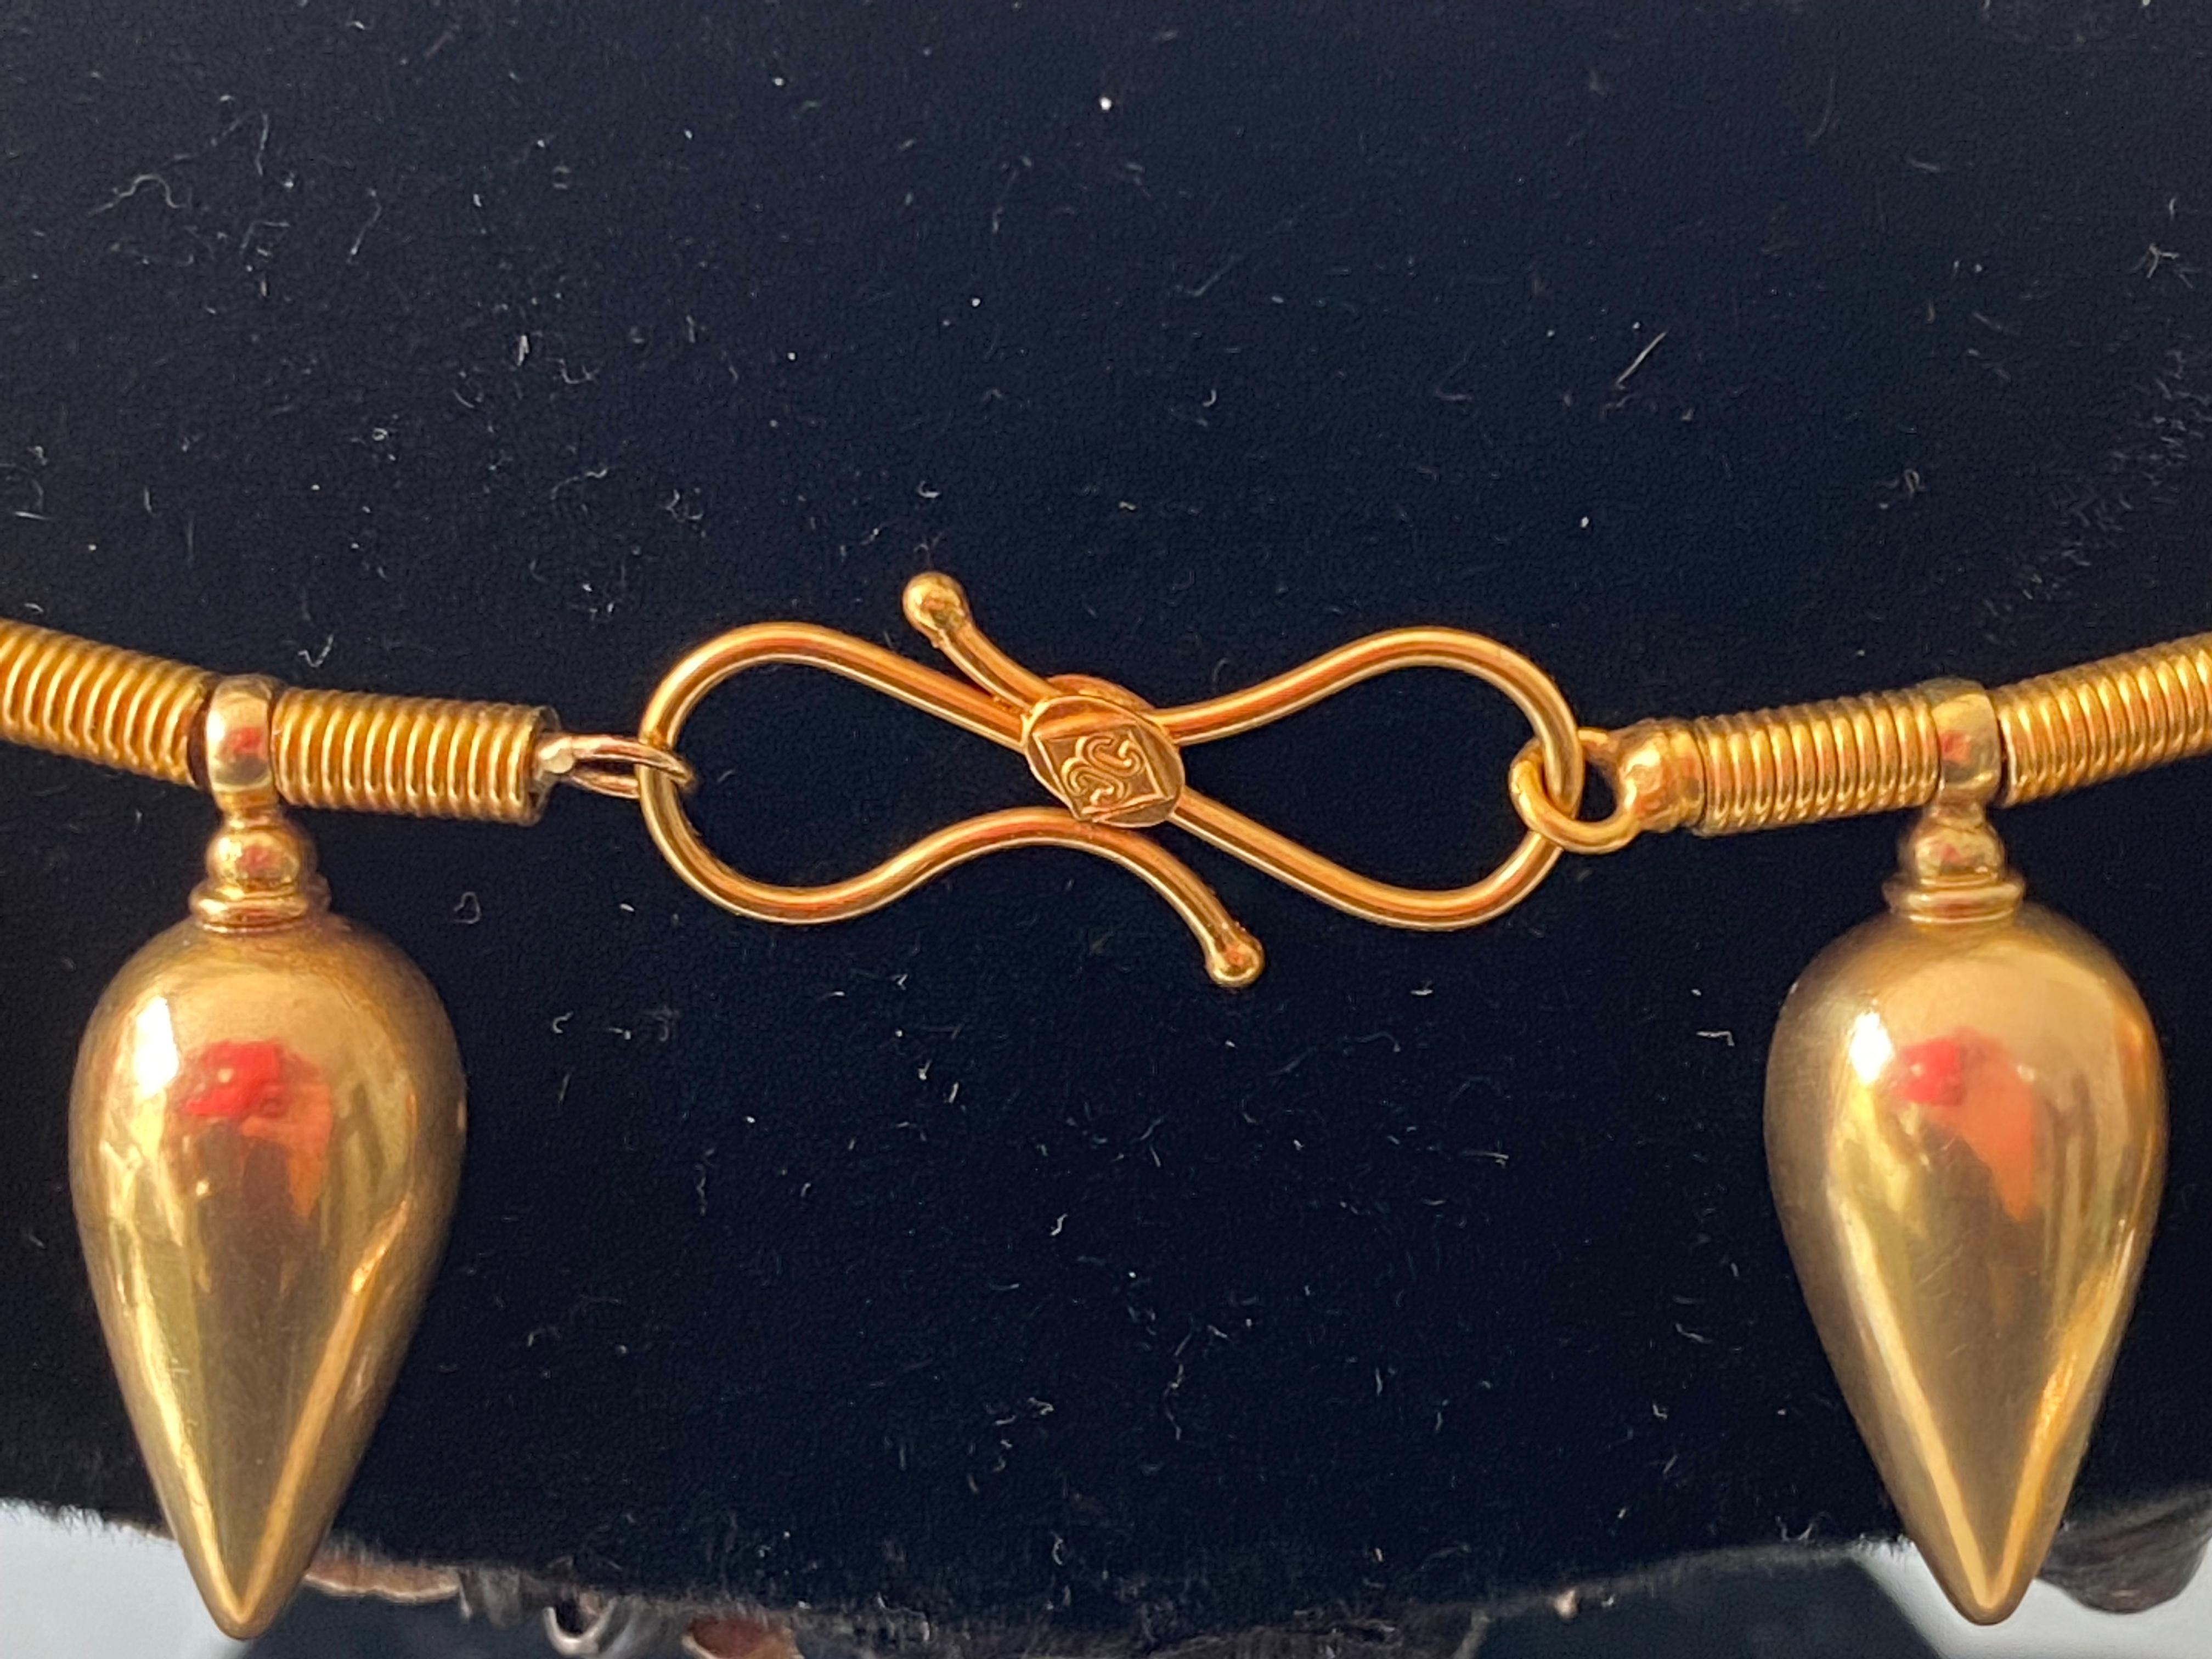 Castellani 18kt Gold Amphora Halskette im Angebot 3